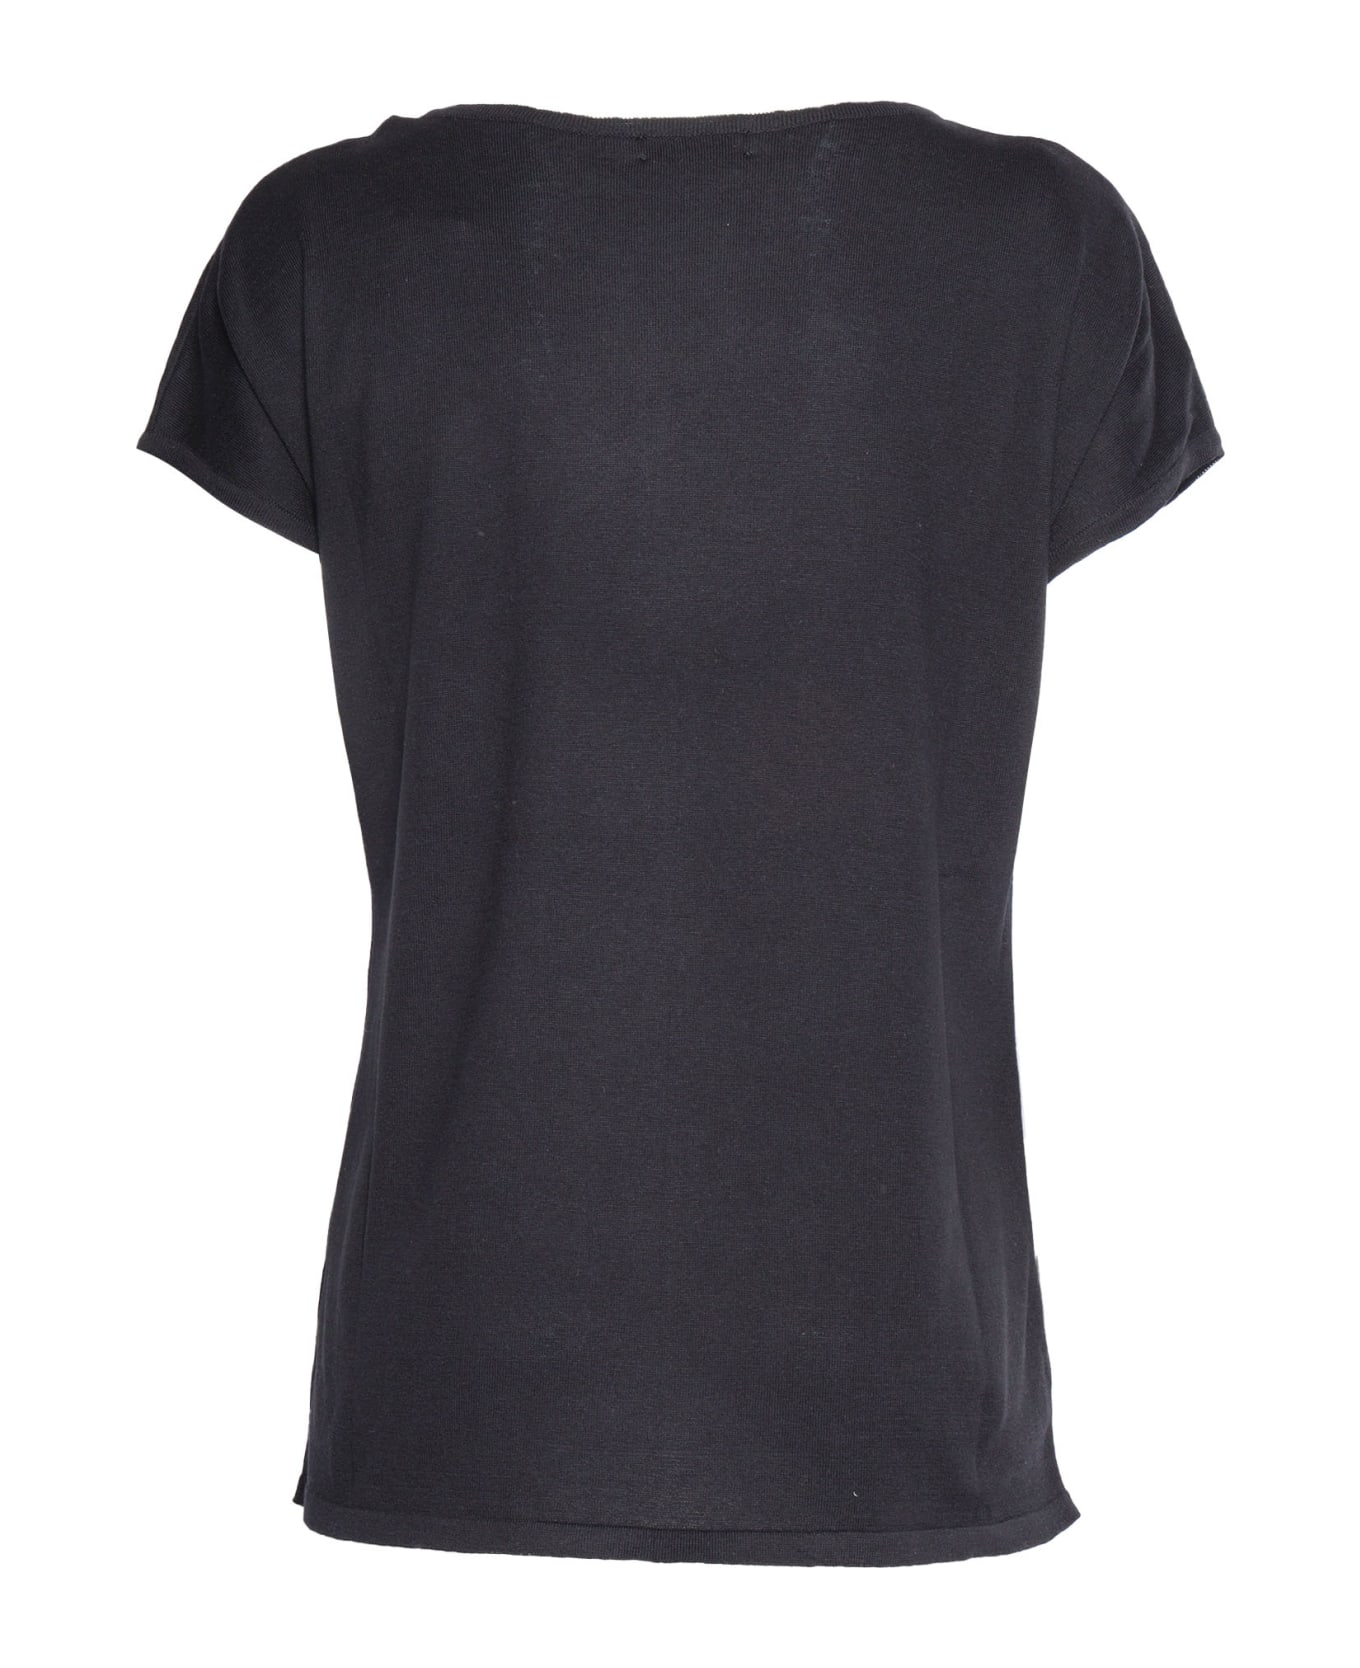 Ballantyne Black T-shirt - BLACK